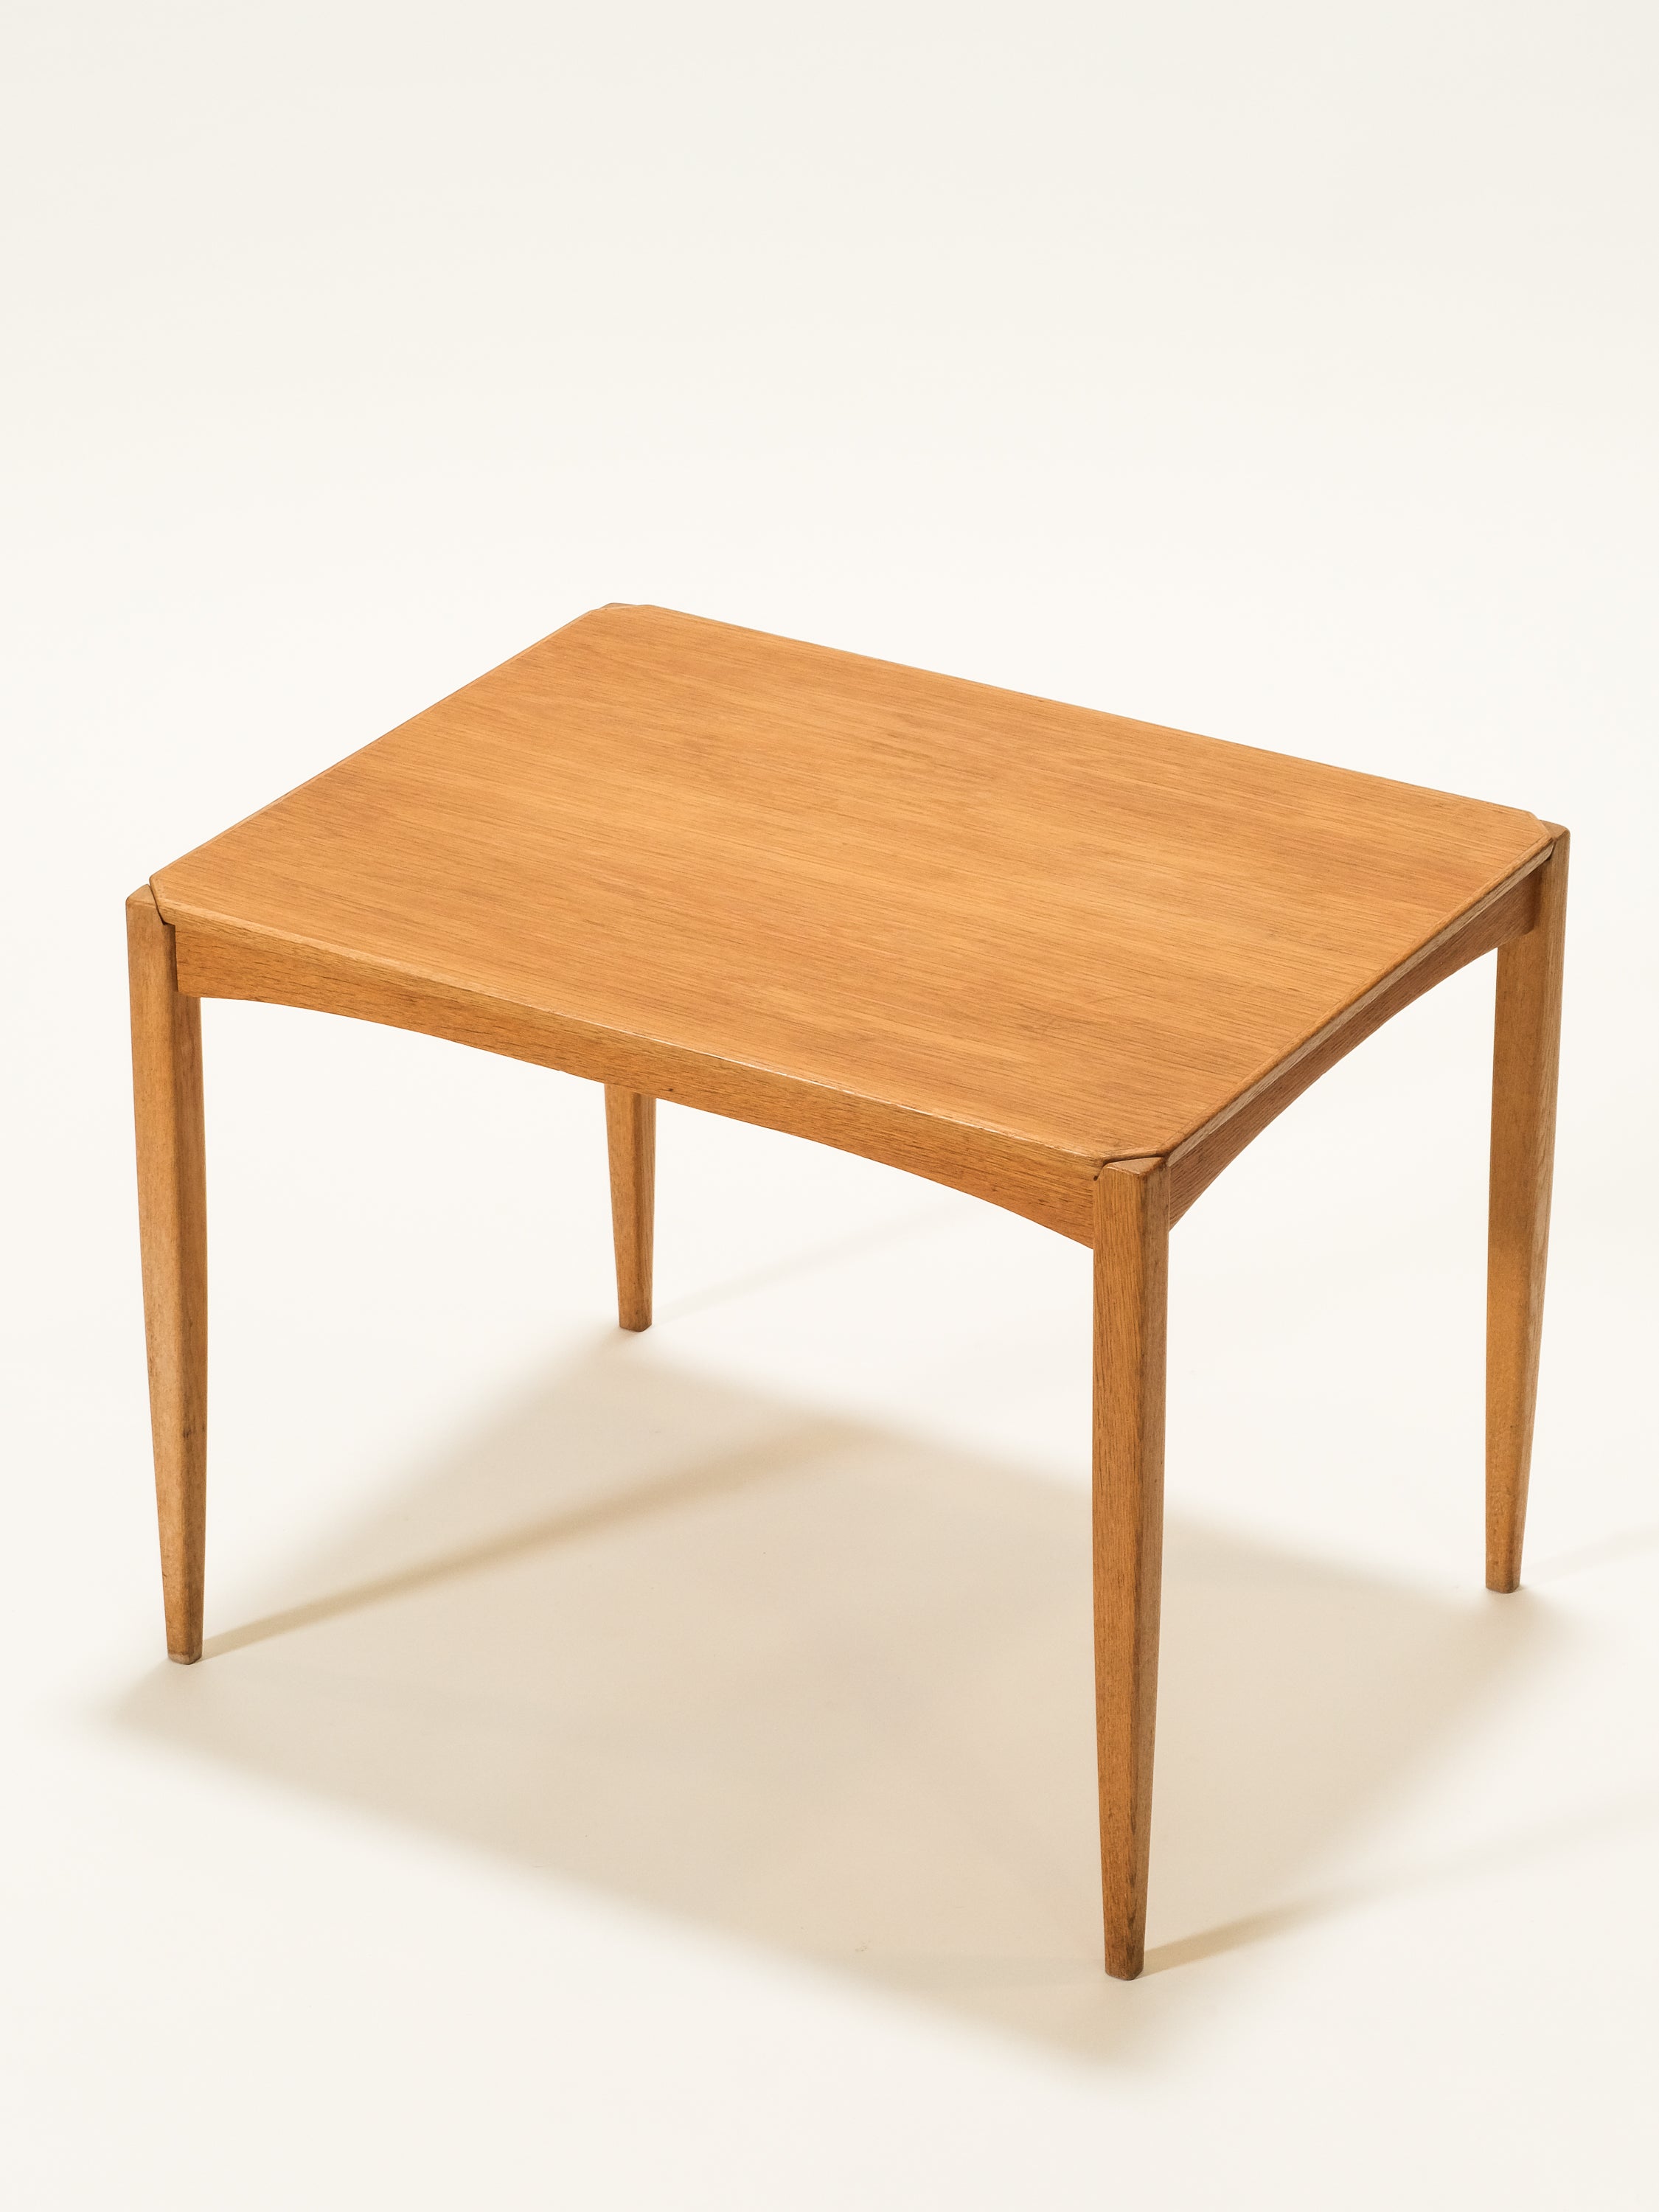 Oak Coffee Table Model "Texas" by Folke Ohlsson, Bra Bohag, Tingströms, 1960s